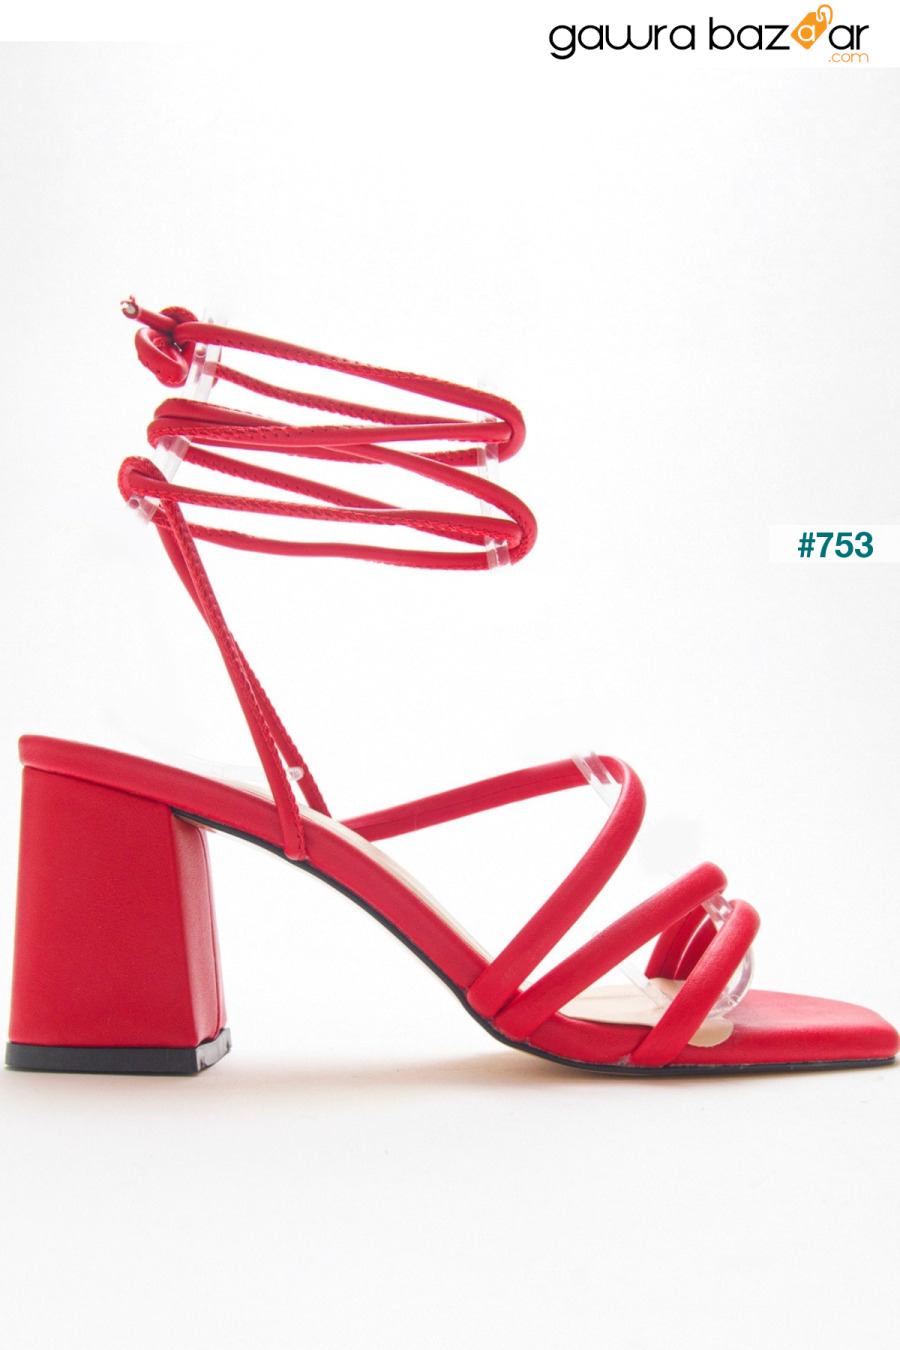 29 حذاء نسائي من Carisa ذو كعب سميك يوميًا يرتدي الكاحل Gate 0